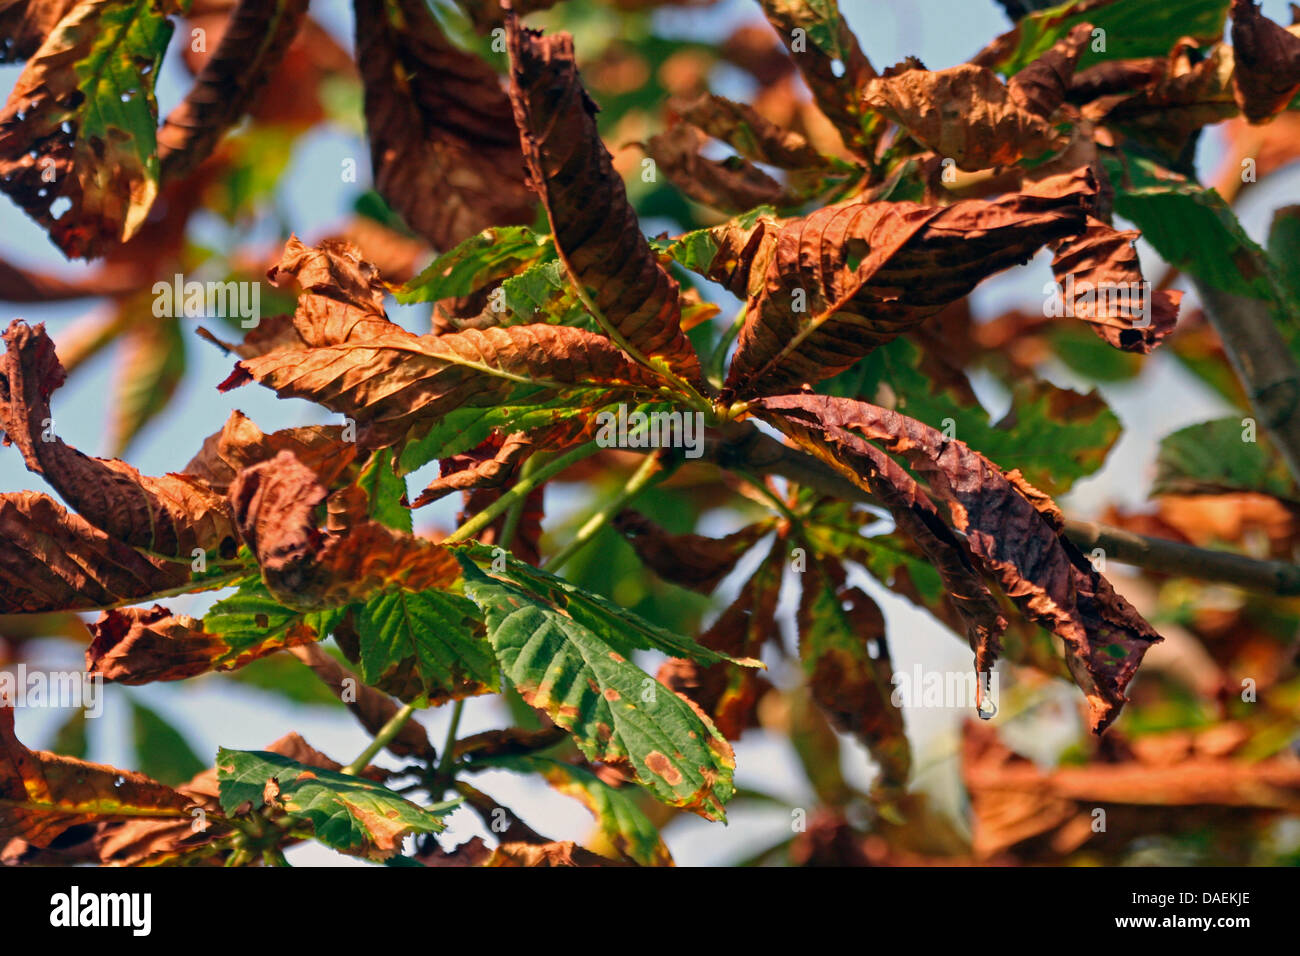 horse chestnut leafminer (Cameraria ohridella), damage at horse chestnut, Germany Stock Photo